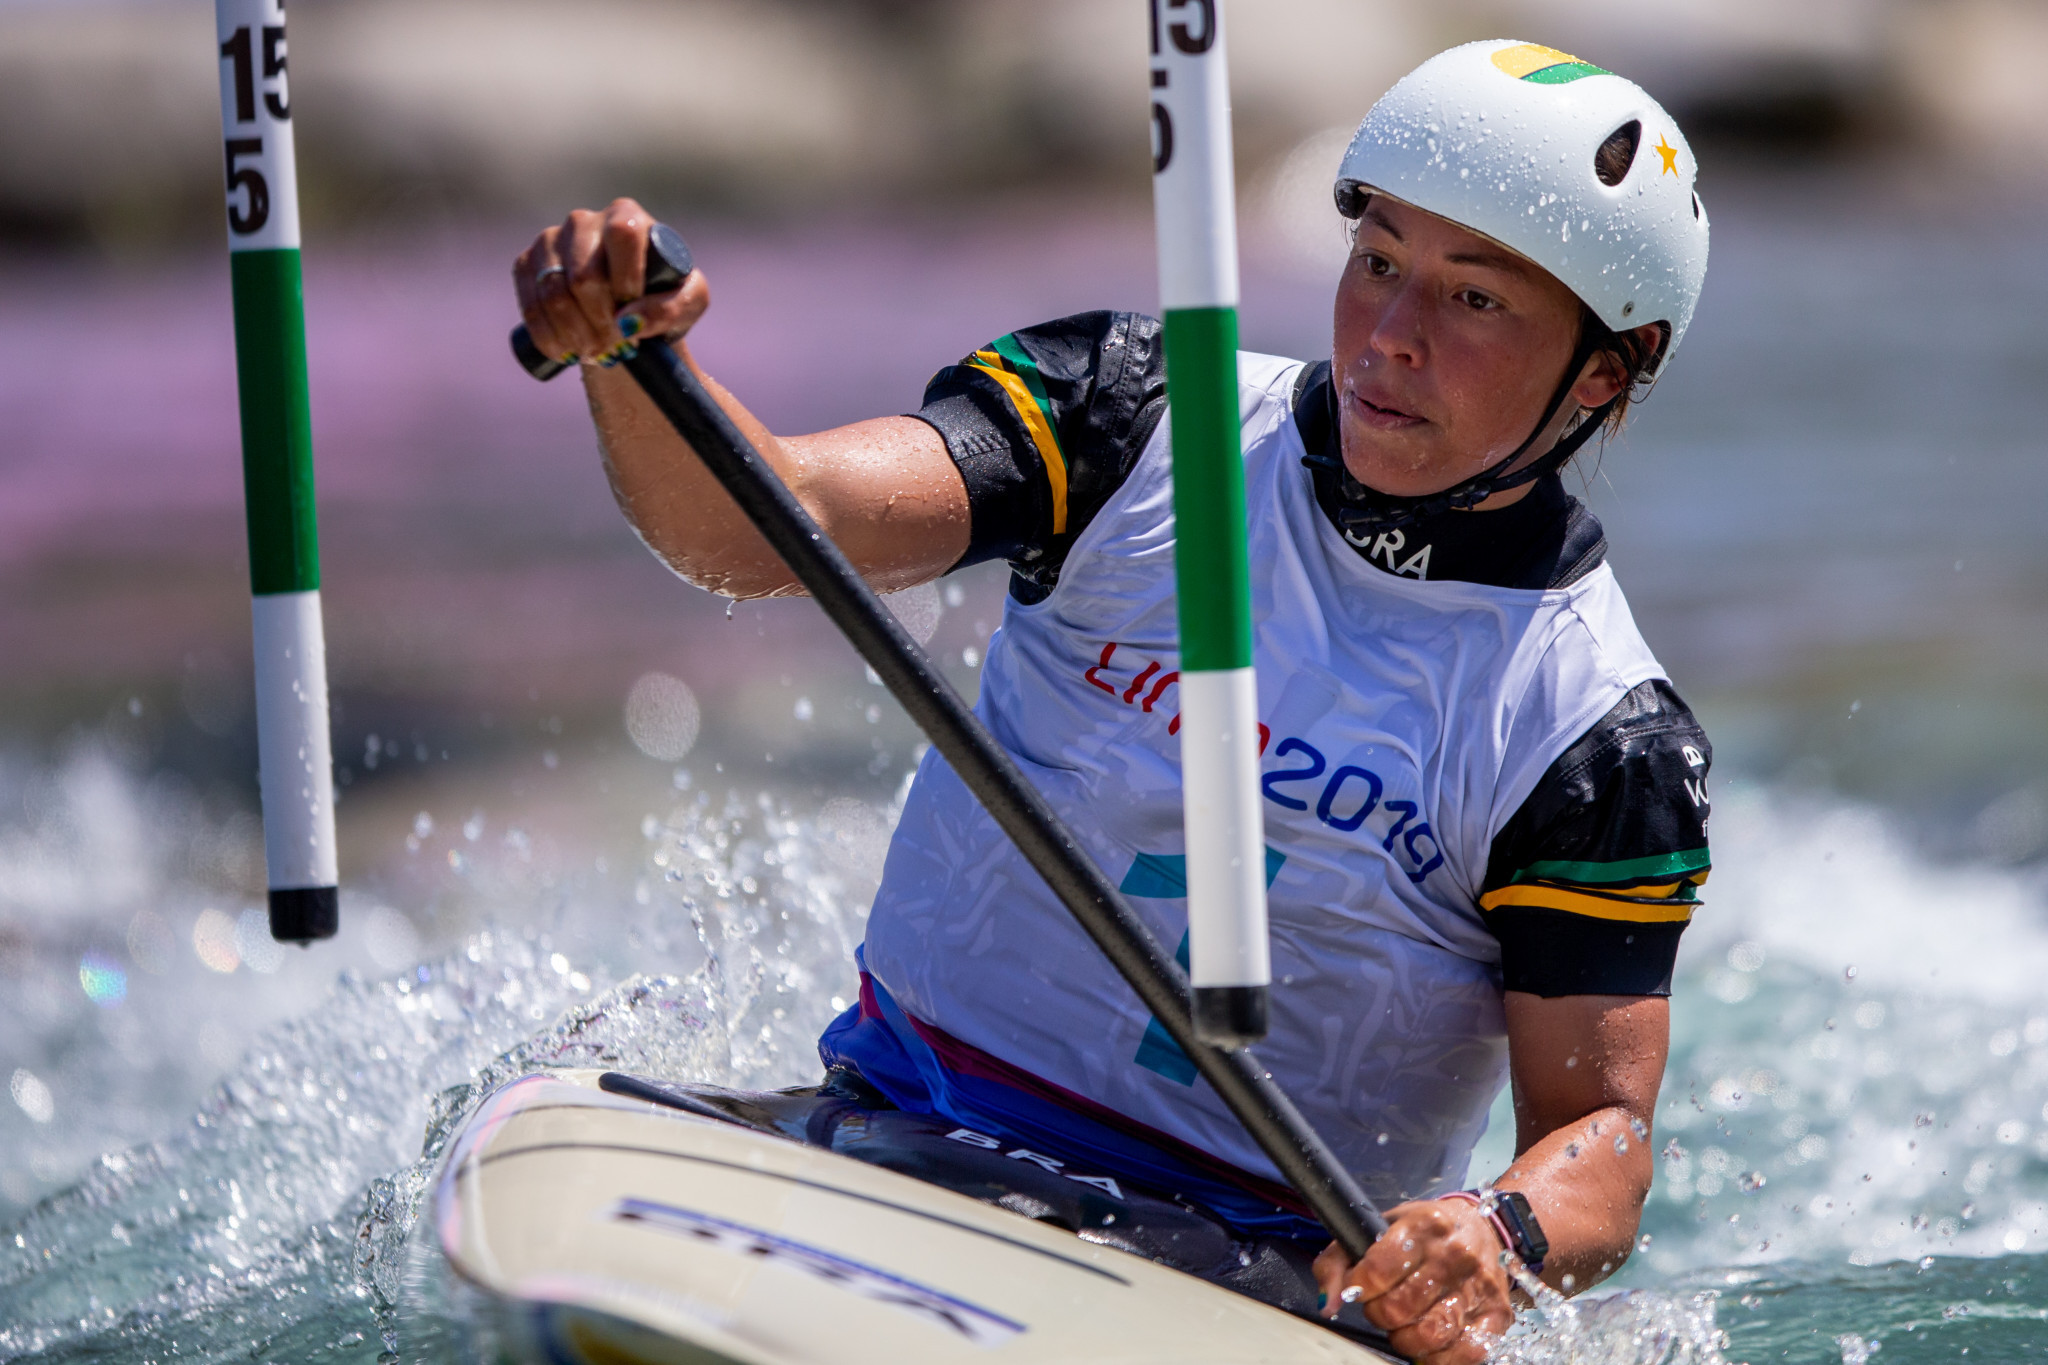 Brazilian Ana Satila acheived two canoe slalom gold medals ©Lima 2019